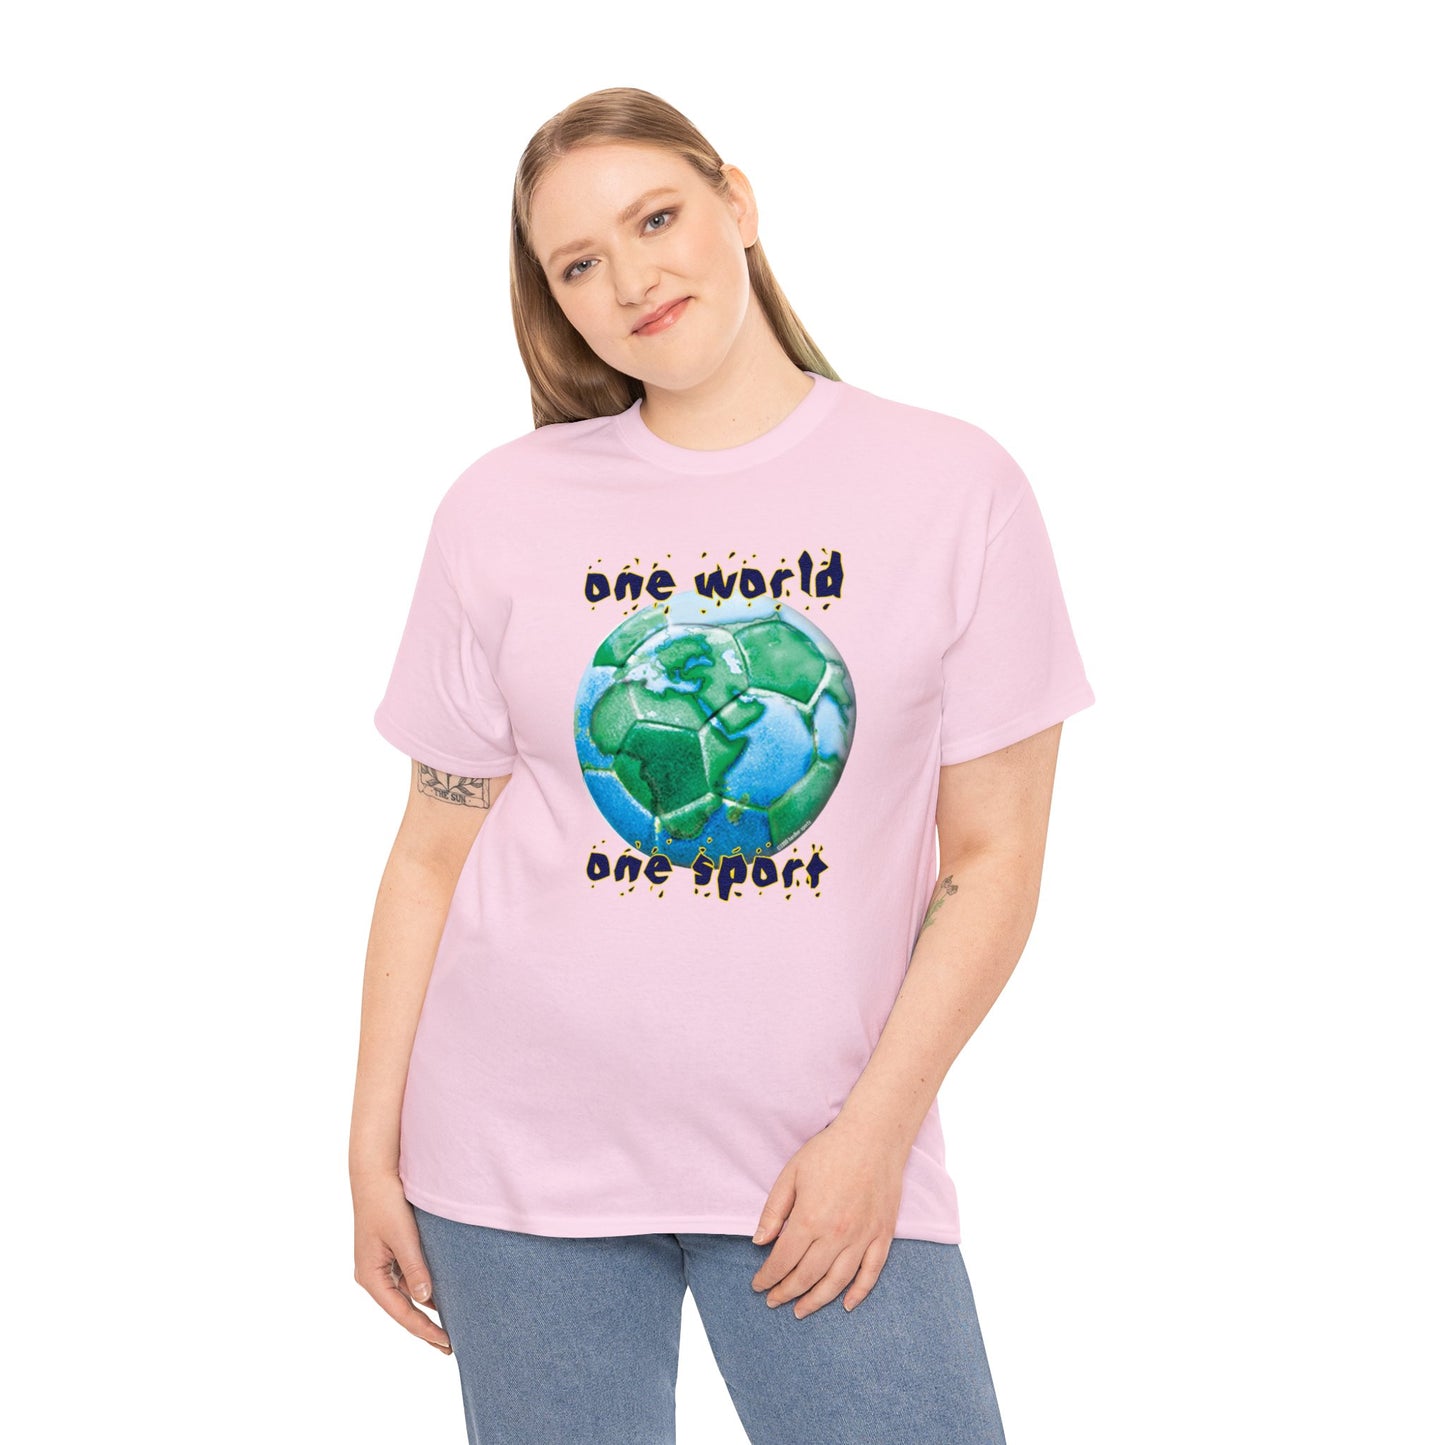 One World One Sport, Soccer Ball, Planet Earth soccer T-Shirt, Soccer is the World Sport, Bright Fun Positive Soccer T-Shirt Design